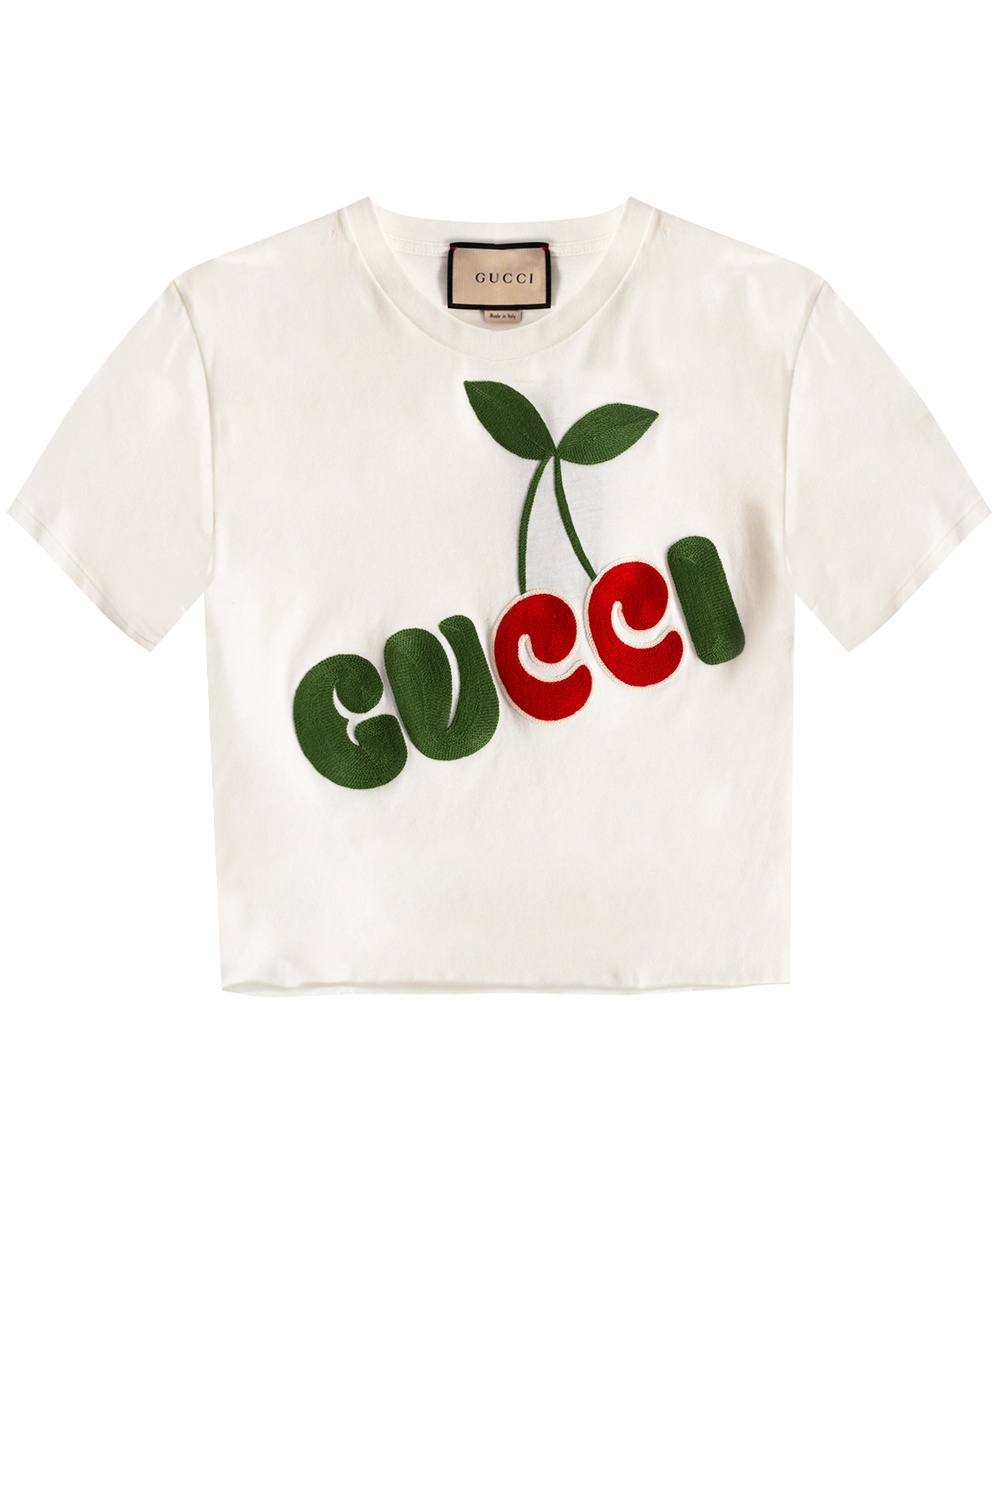 Logo T-shirt Gucci - Vitkac Canada